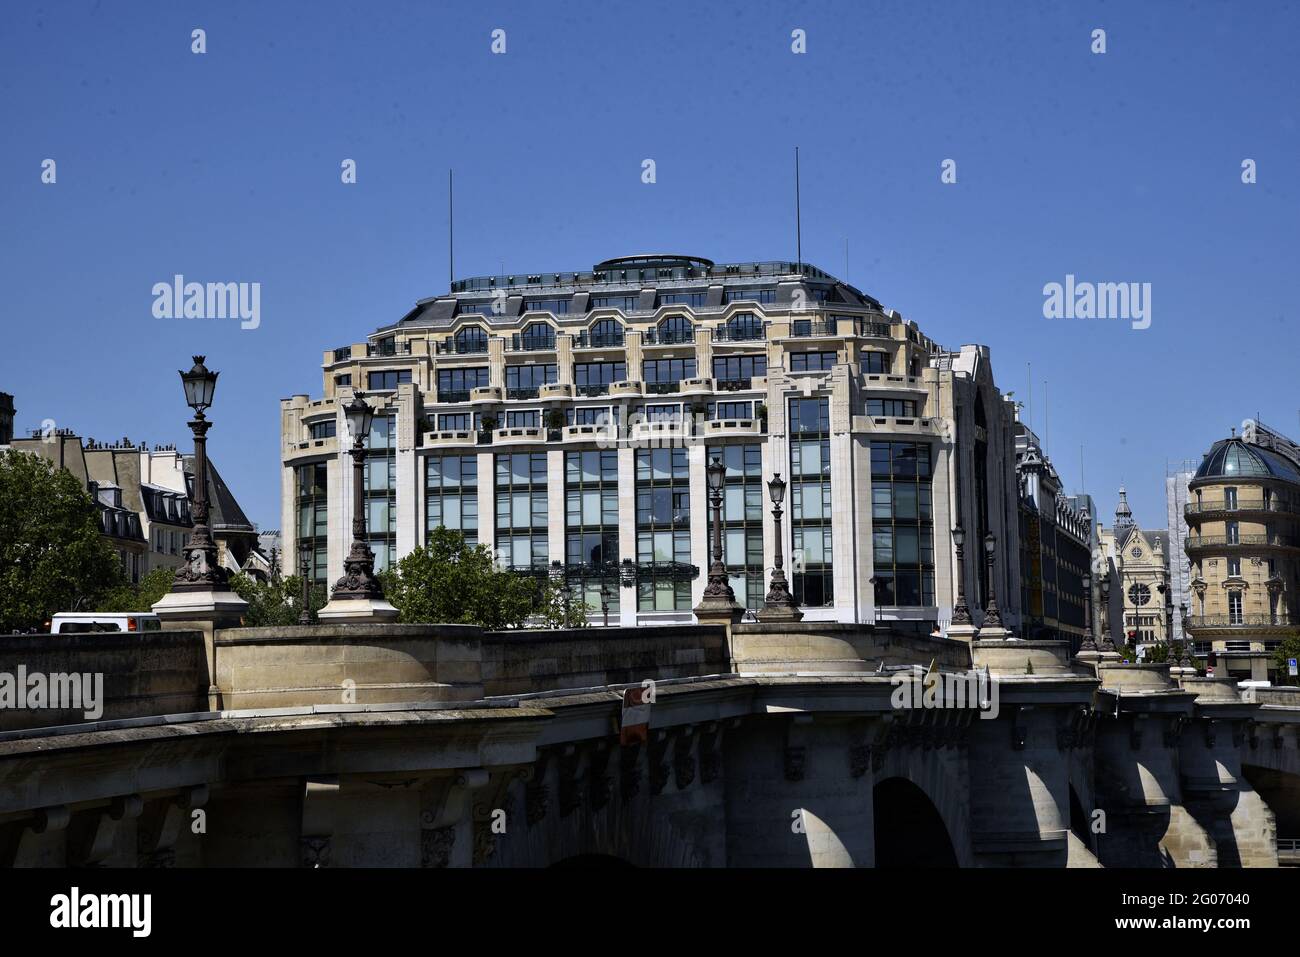 Exclusive Pictures Inside Paris Iconic Building La Samaritaine